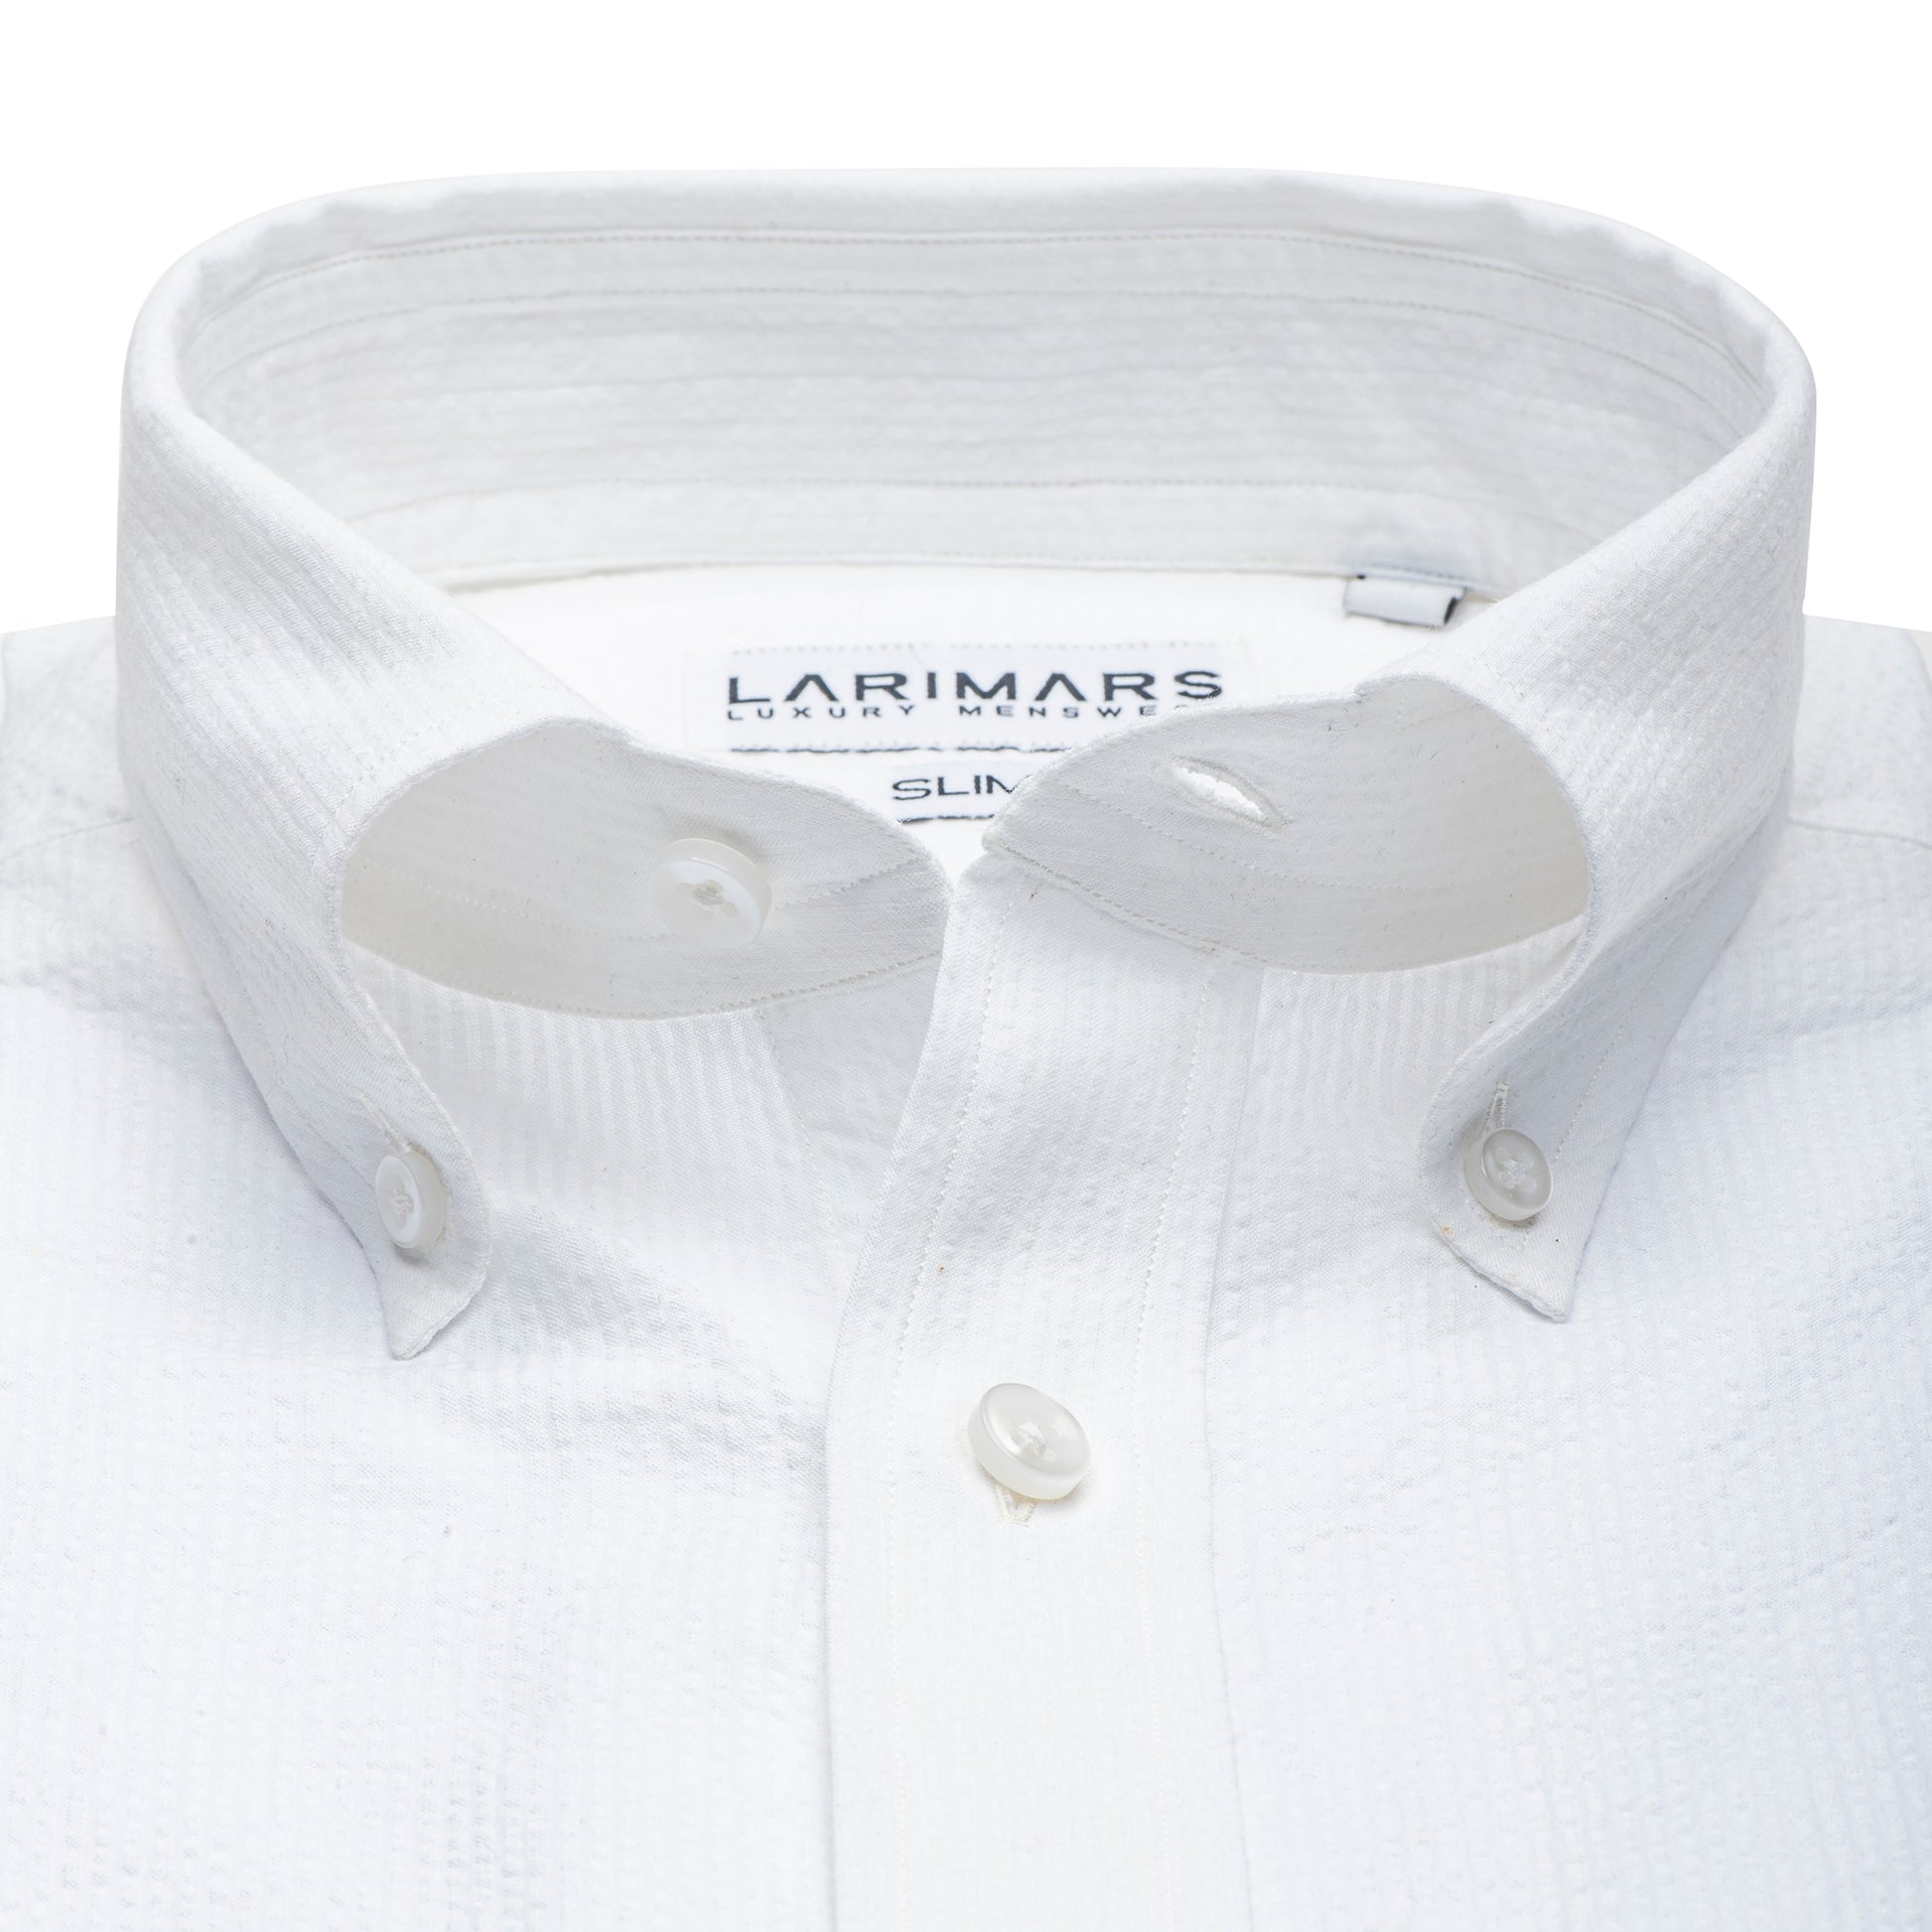 Collar of White Cotton Shirt